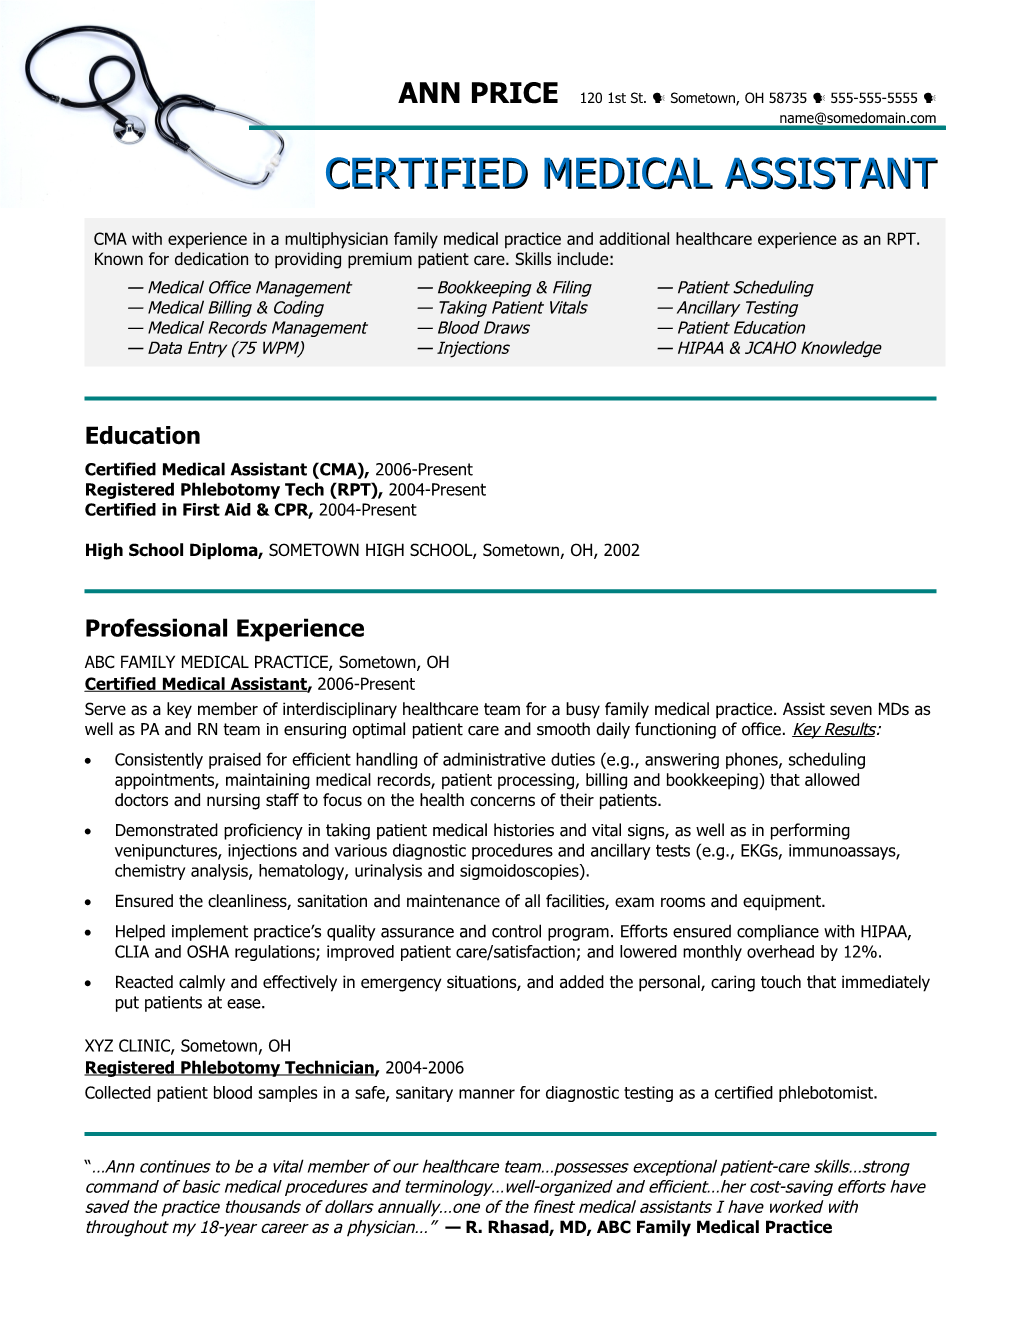 Sample Resume for a Medical Assistant